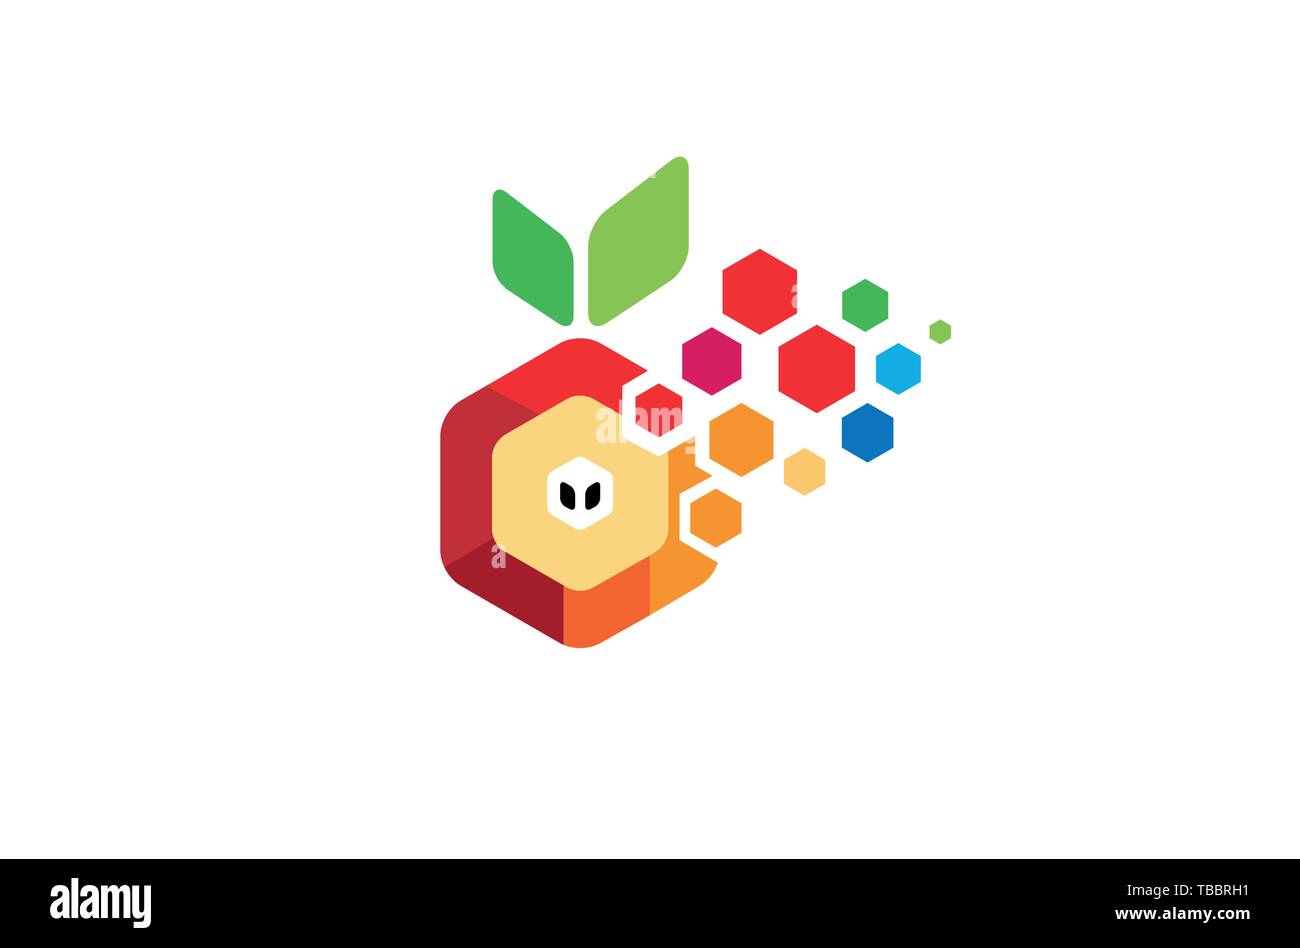 Kreative W Schreiben sechseckige Pixelated Orange FruitLogo Design Symbol Vektor Illustration Stock Vektor